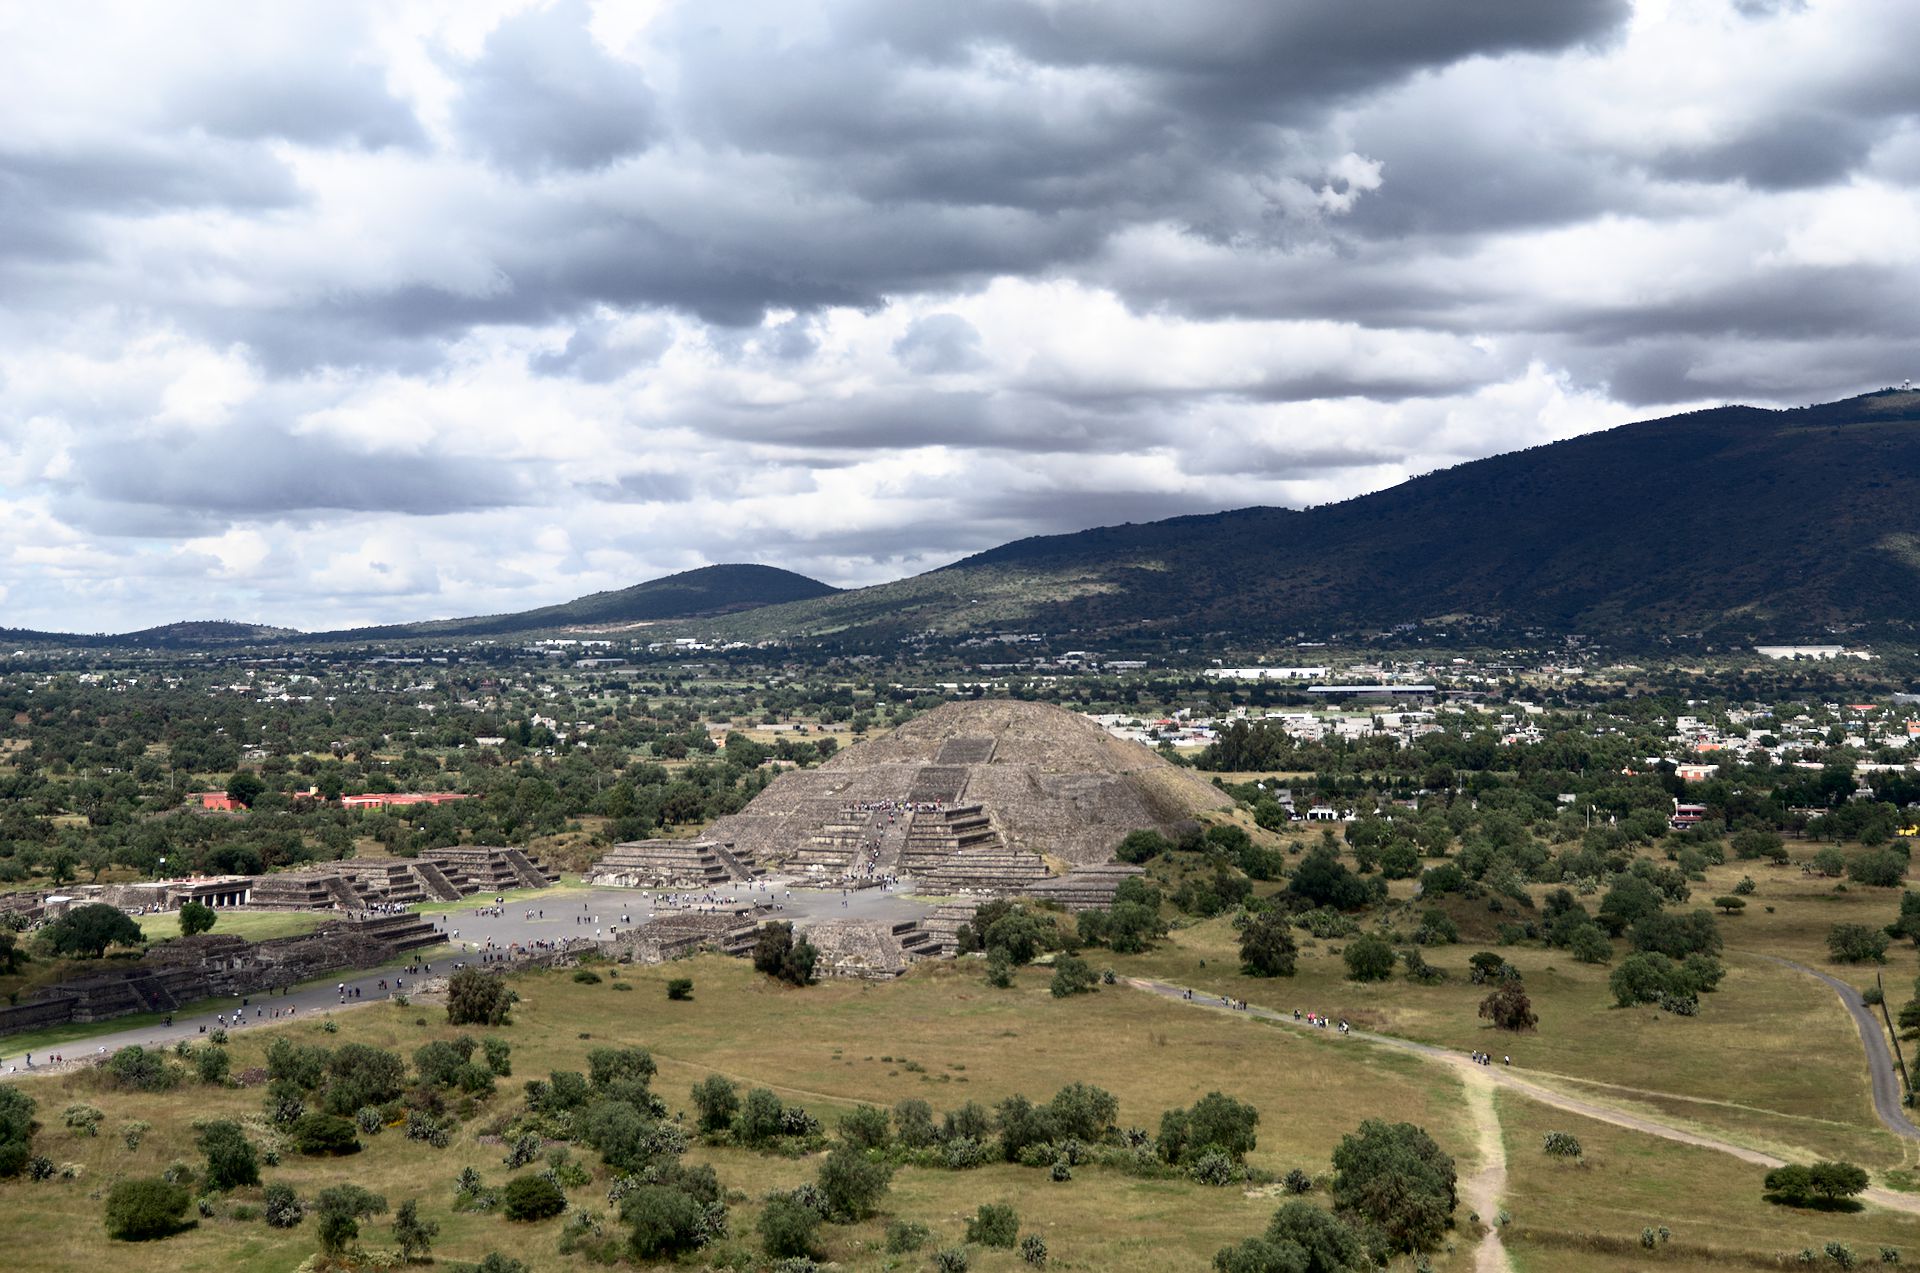 Ein Ausflug nach Teotihuacán